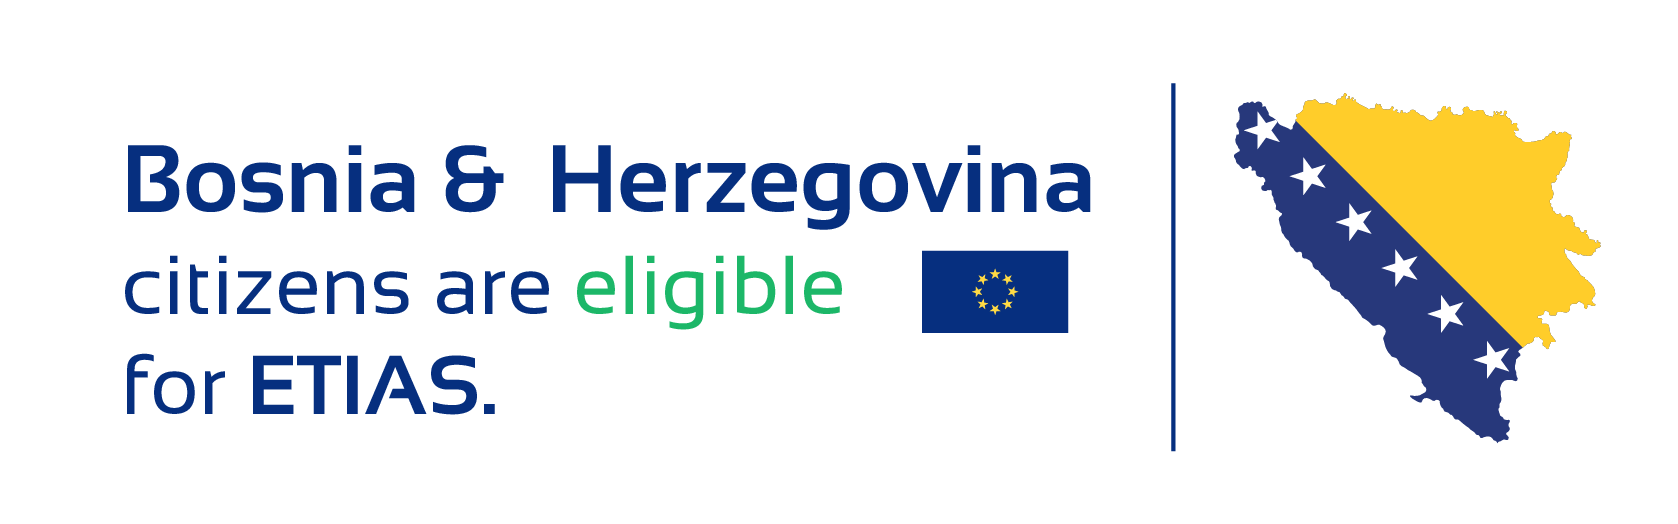 Bosnia and Herzegovina citizens are eligible for ETIAS